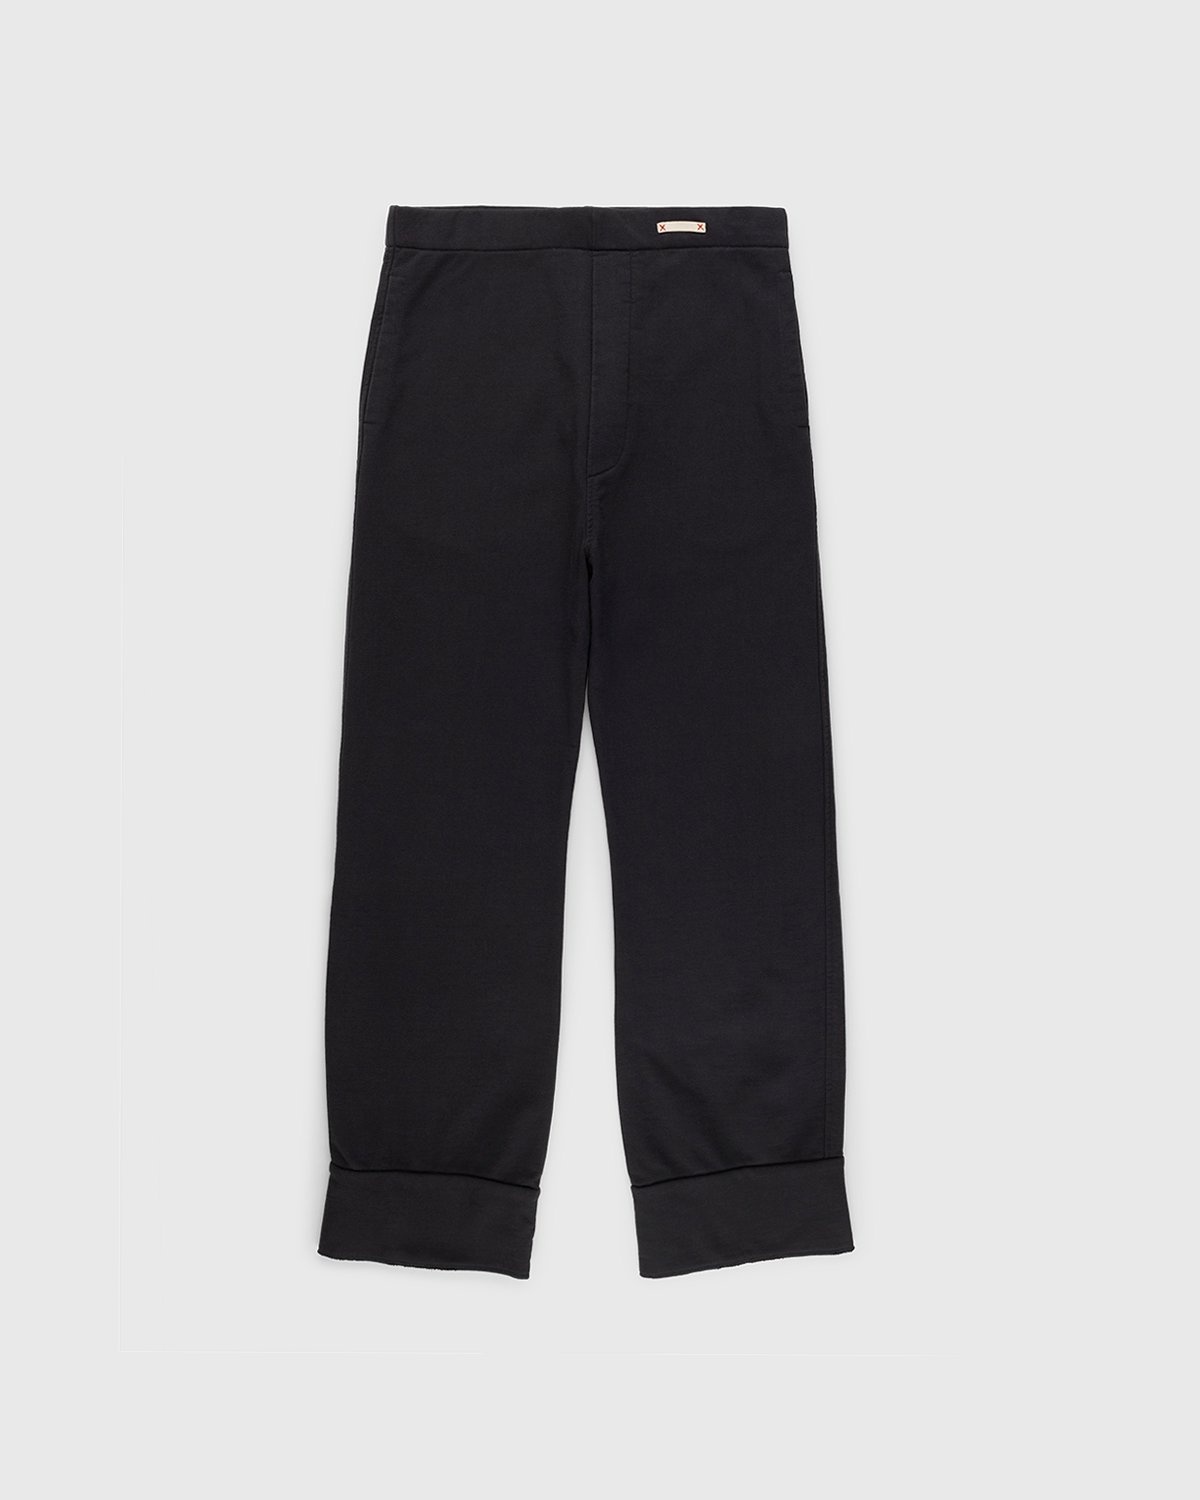 Maison Margiela – Tailored Cotton Trousers Washed Black - Pants - Black - Image 1